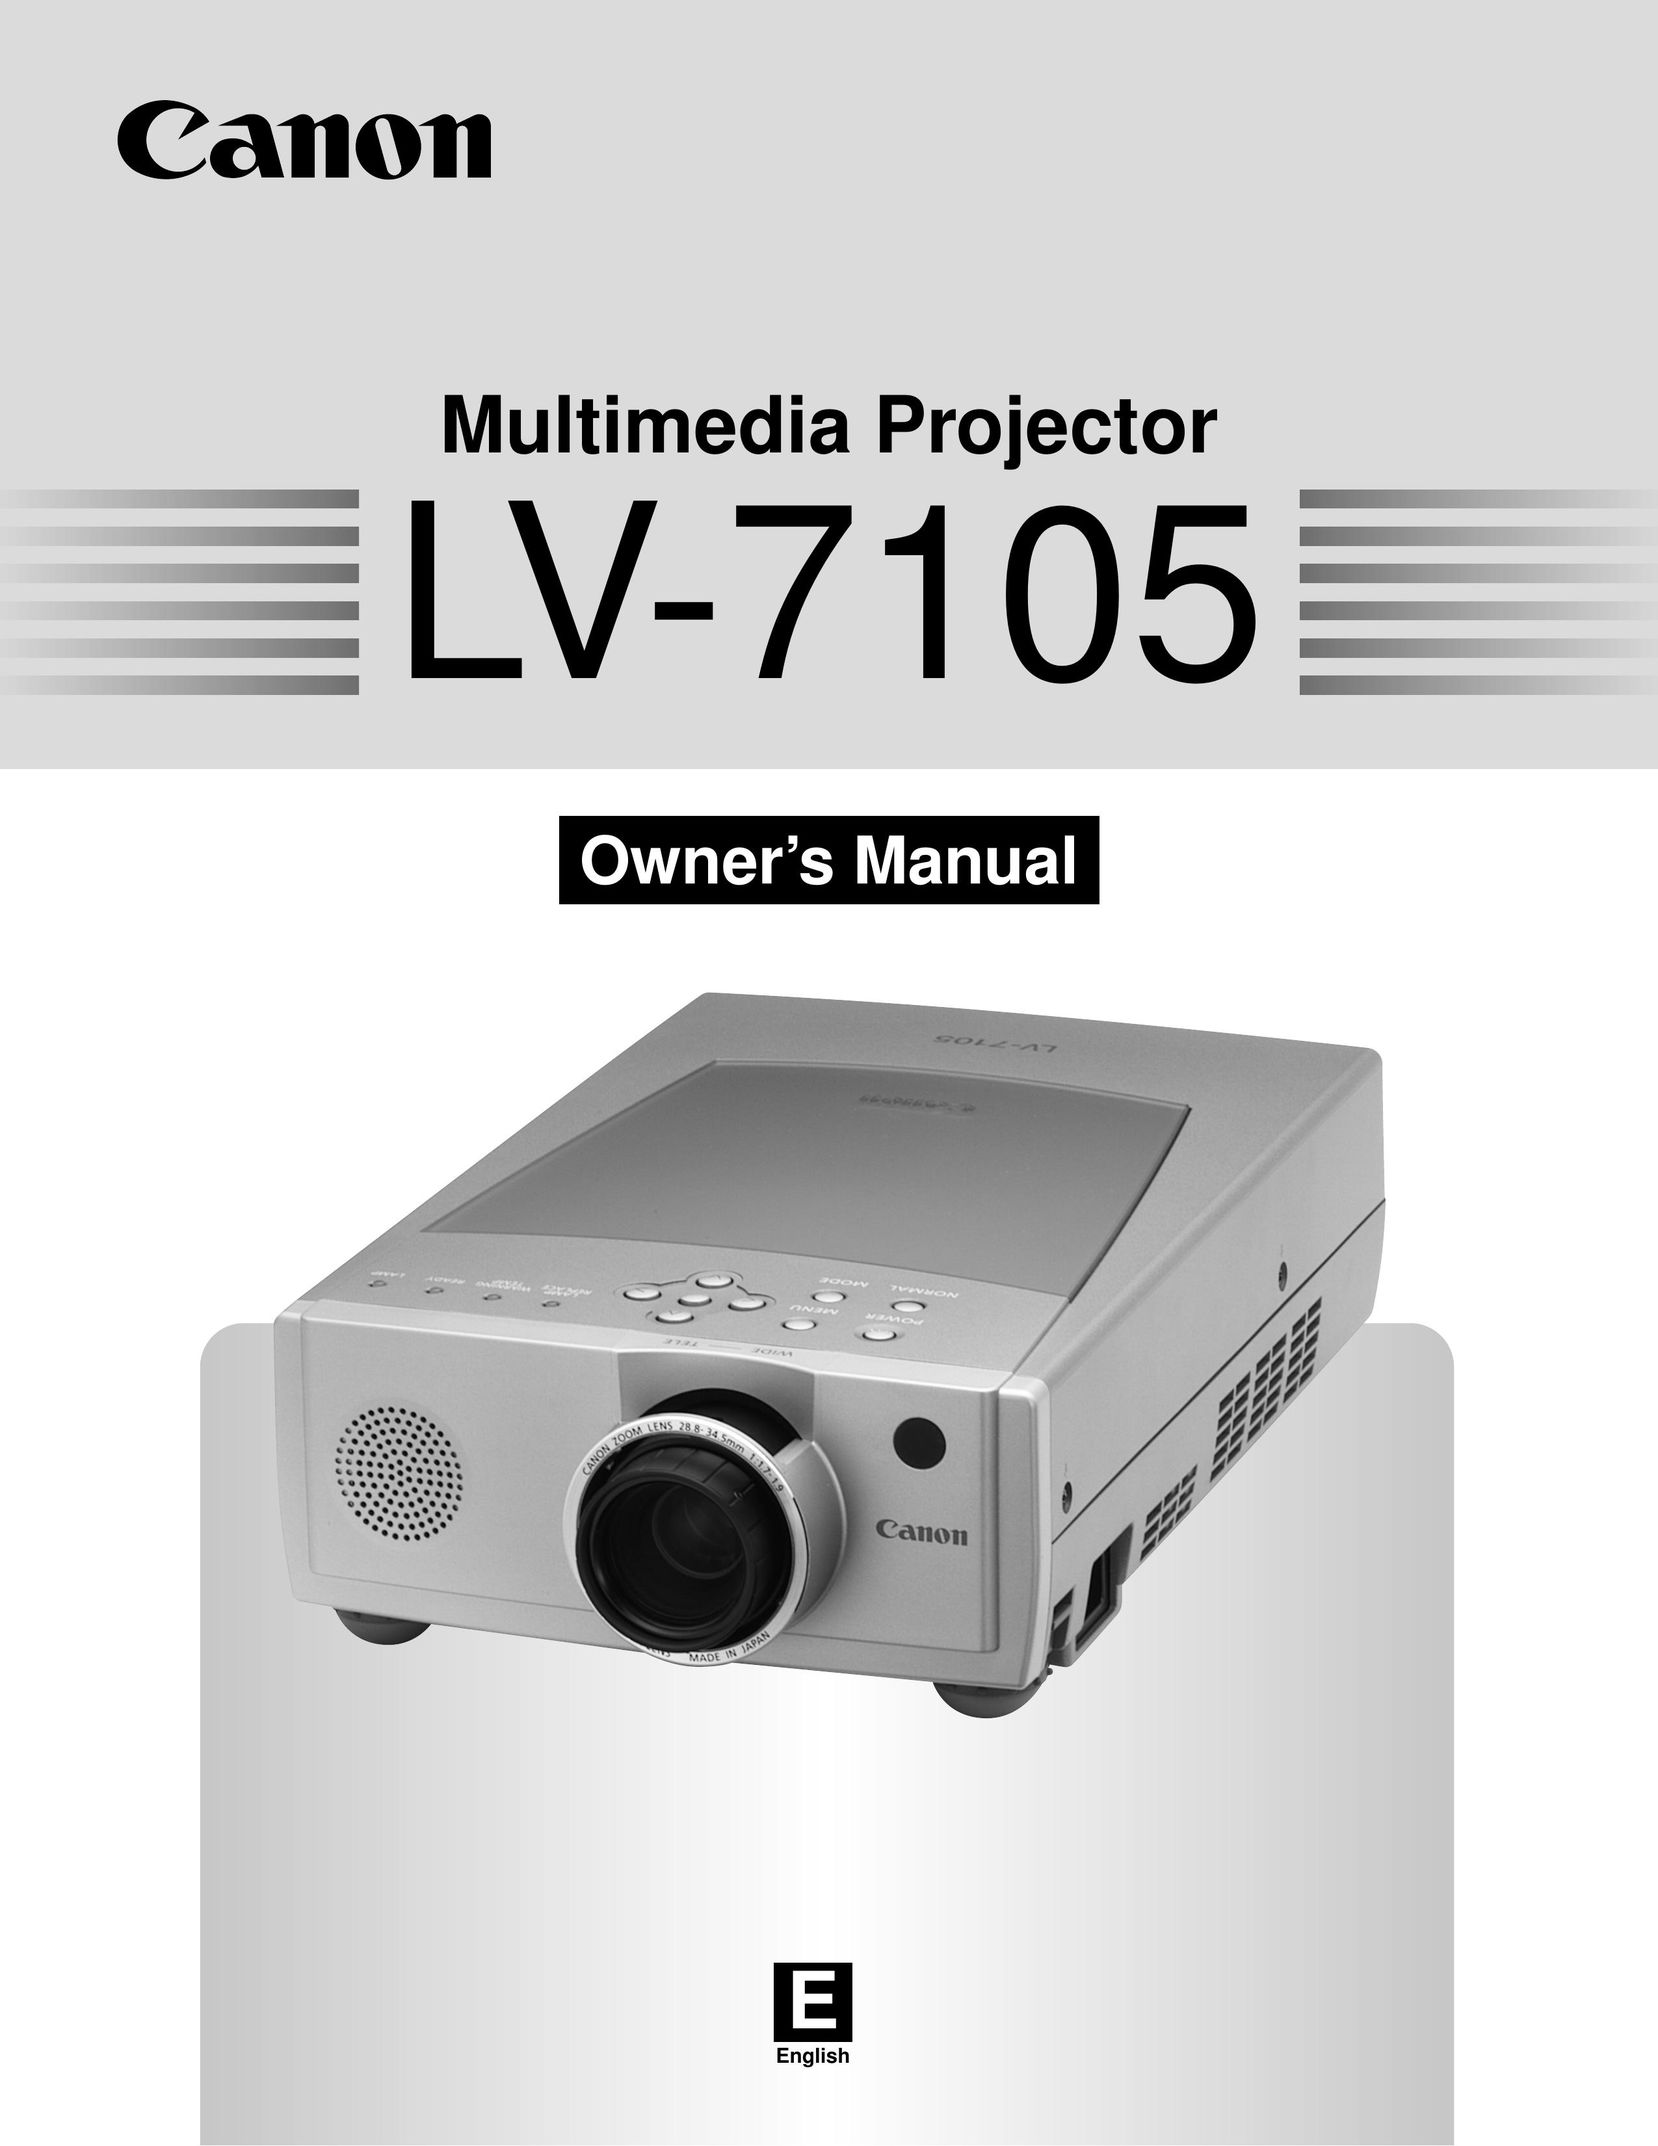 Canon LV-7105 Projector User Manual